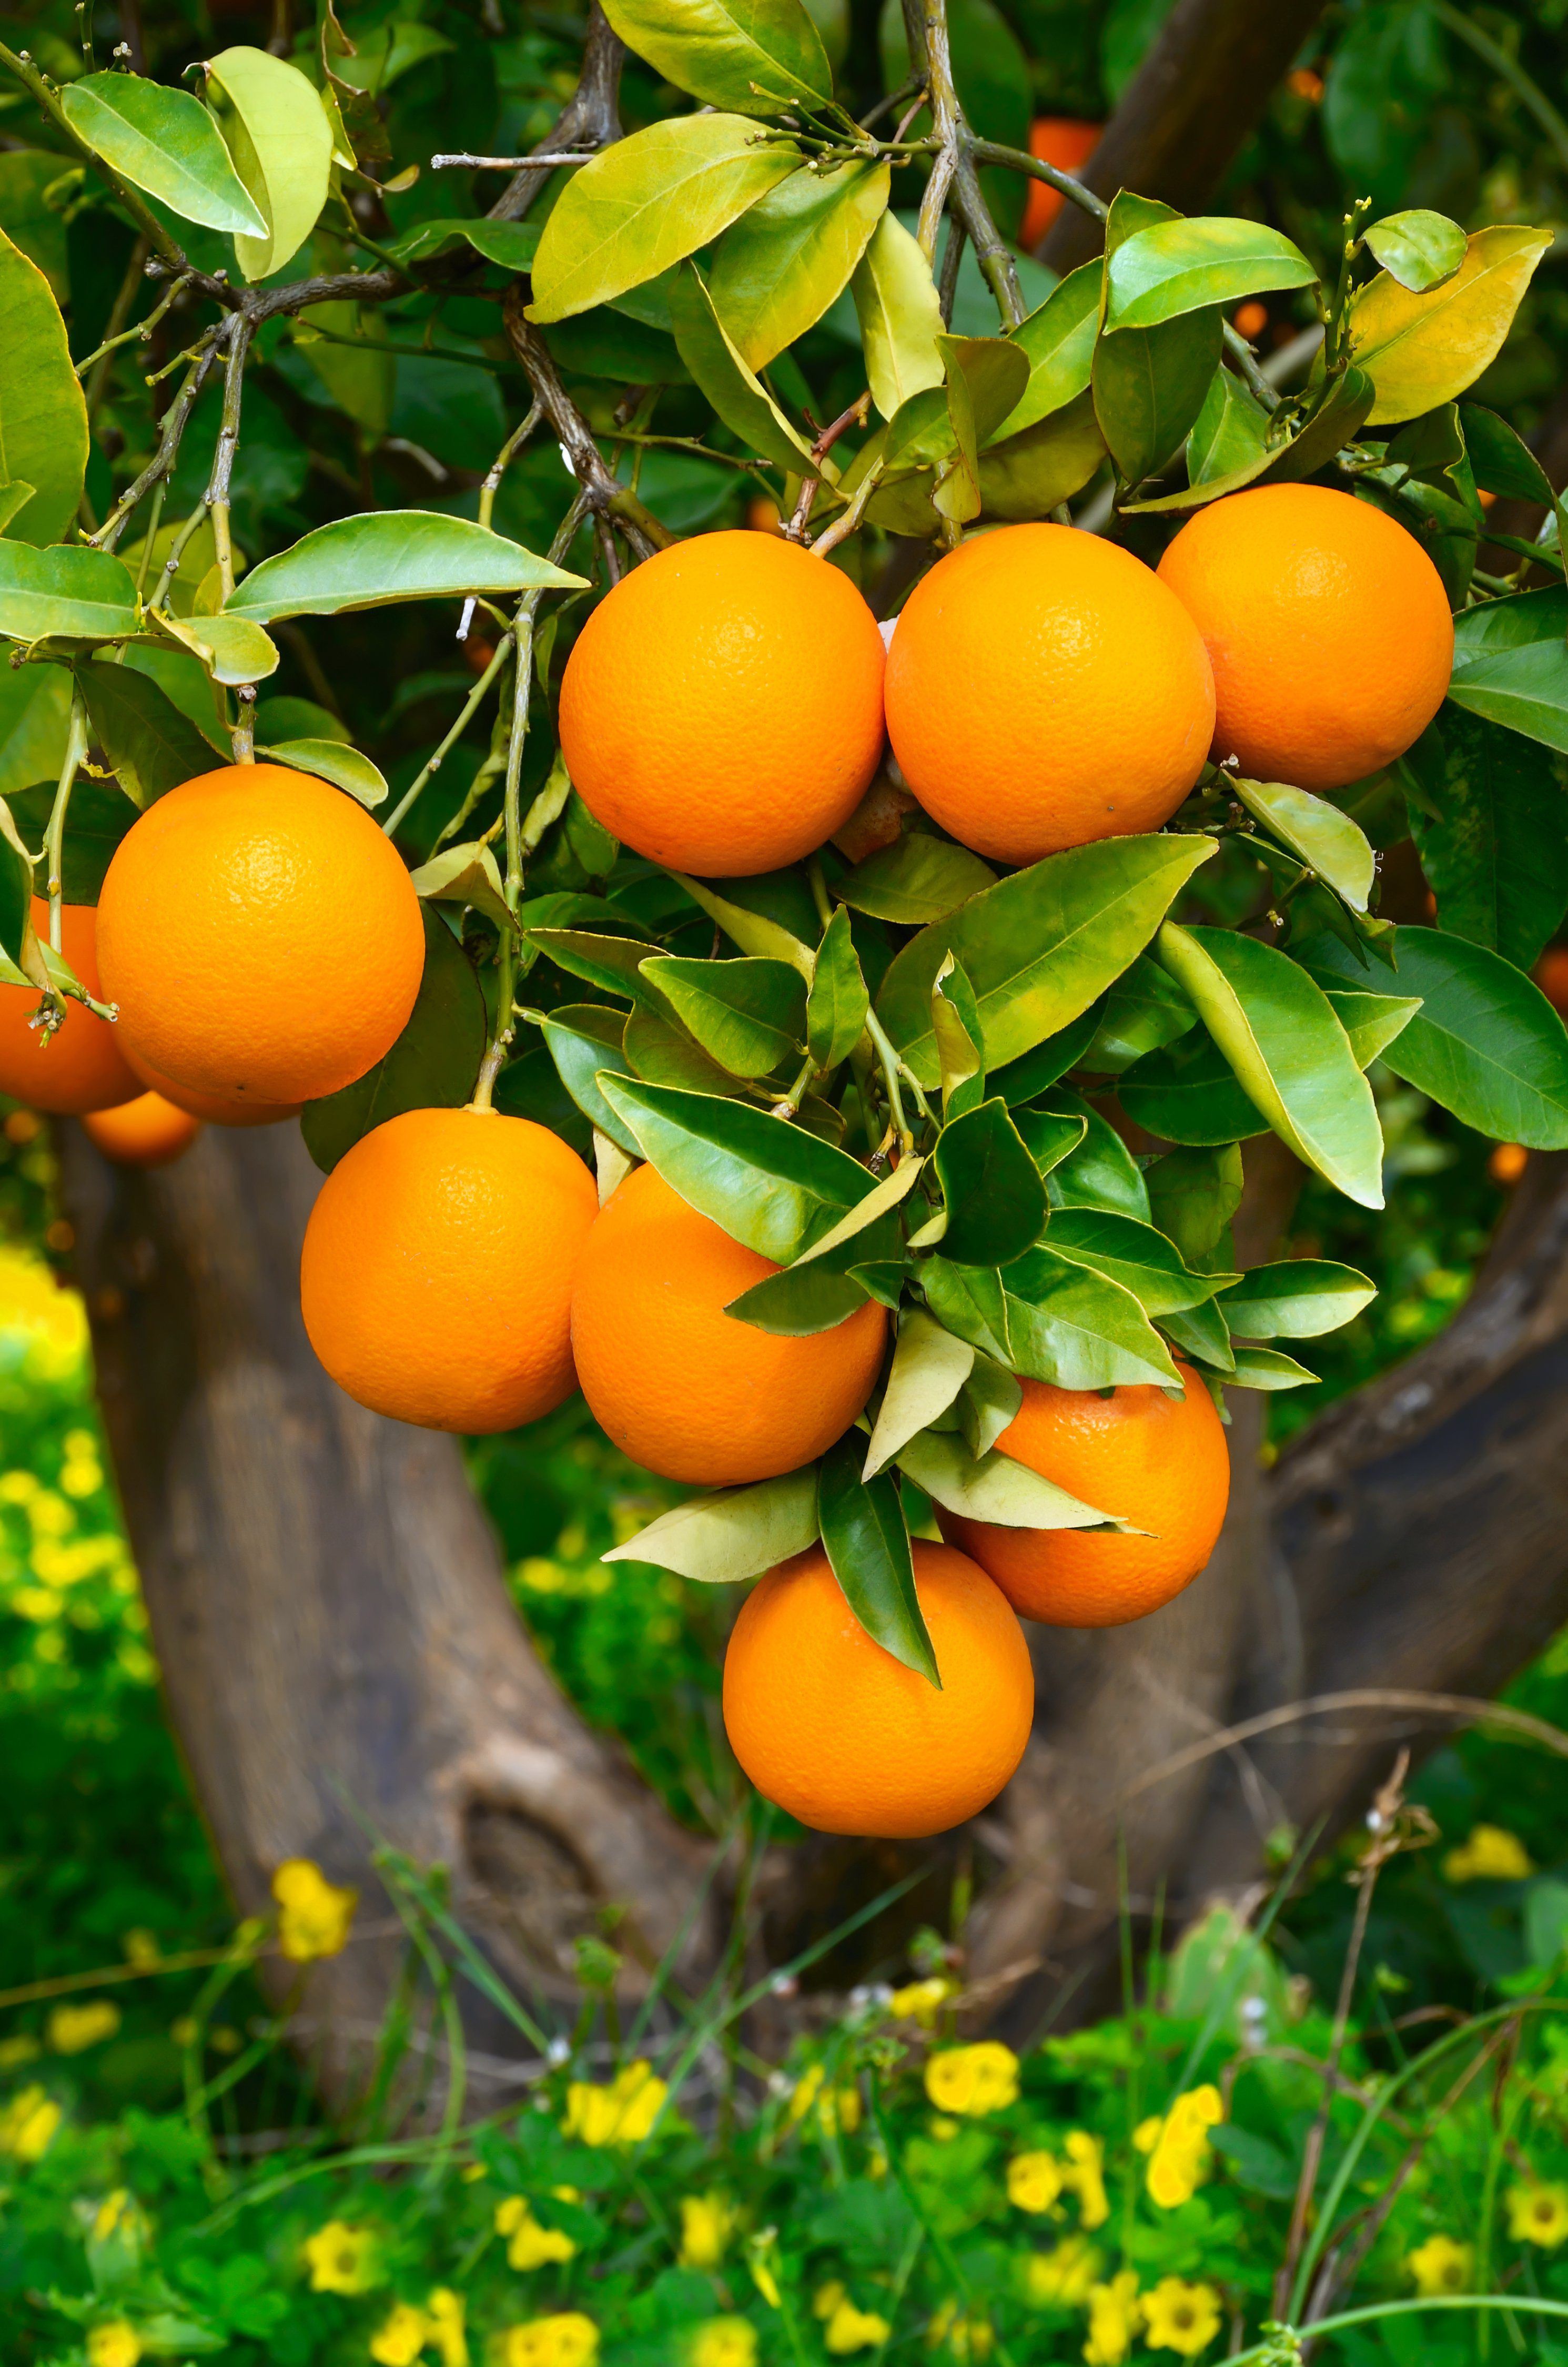 Grow Citrus Plants - Oranges on a tree